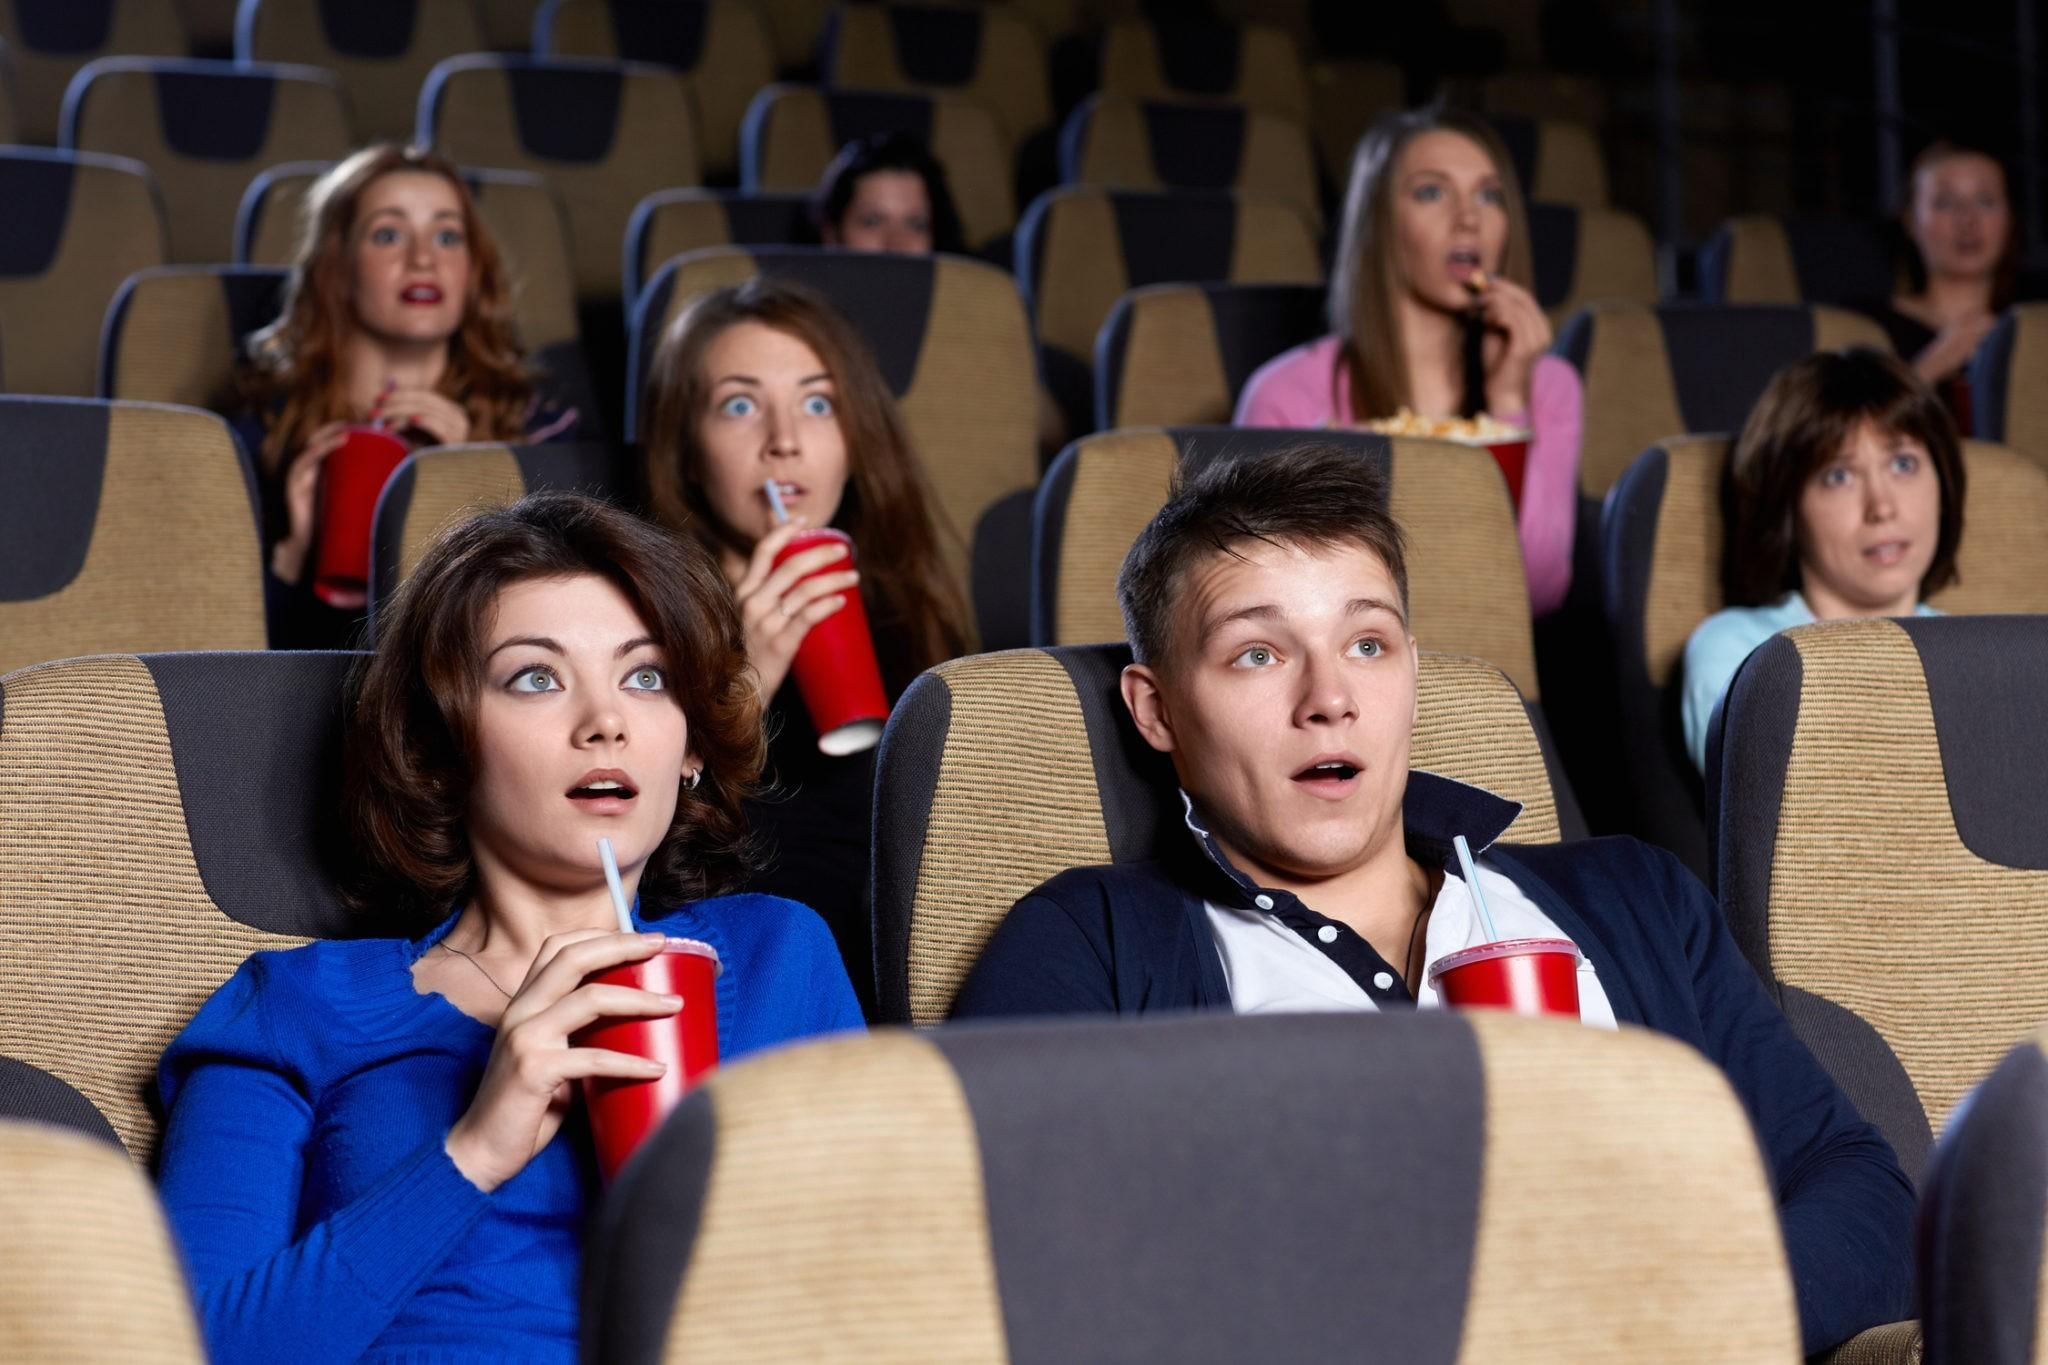 We can go to the cinema. Зрители в кинотеатре. Люди сидят в кинотеатре. Кинотеатр. Кинозал с людьми.